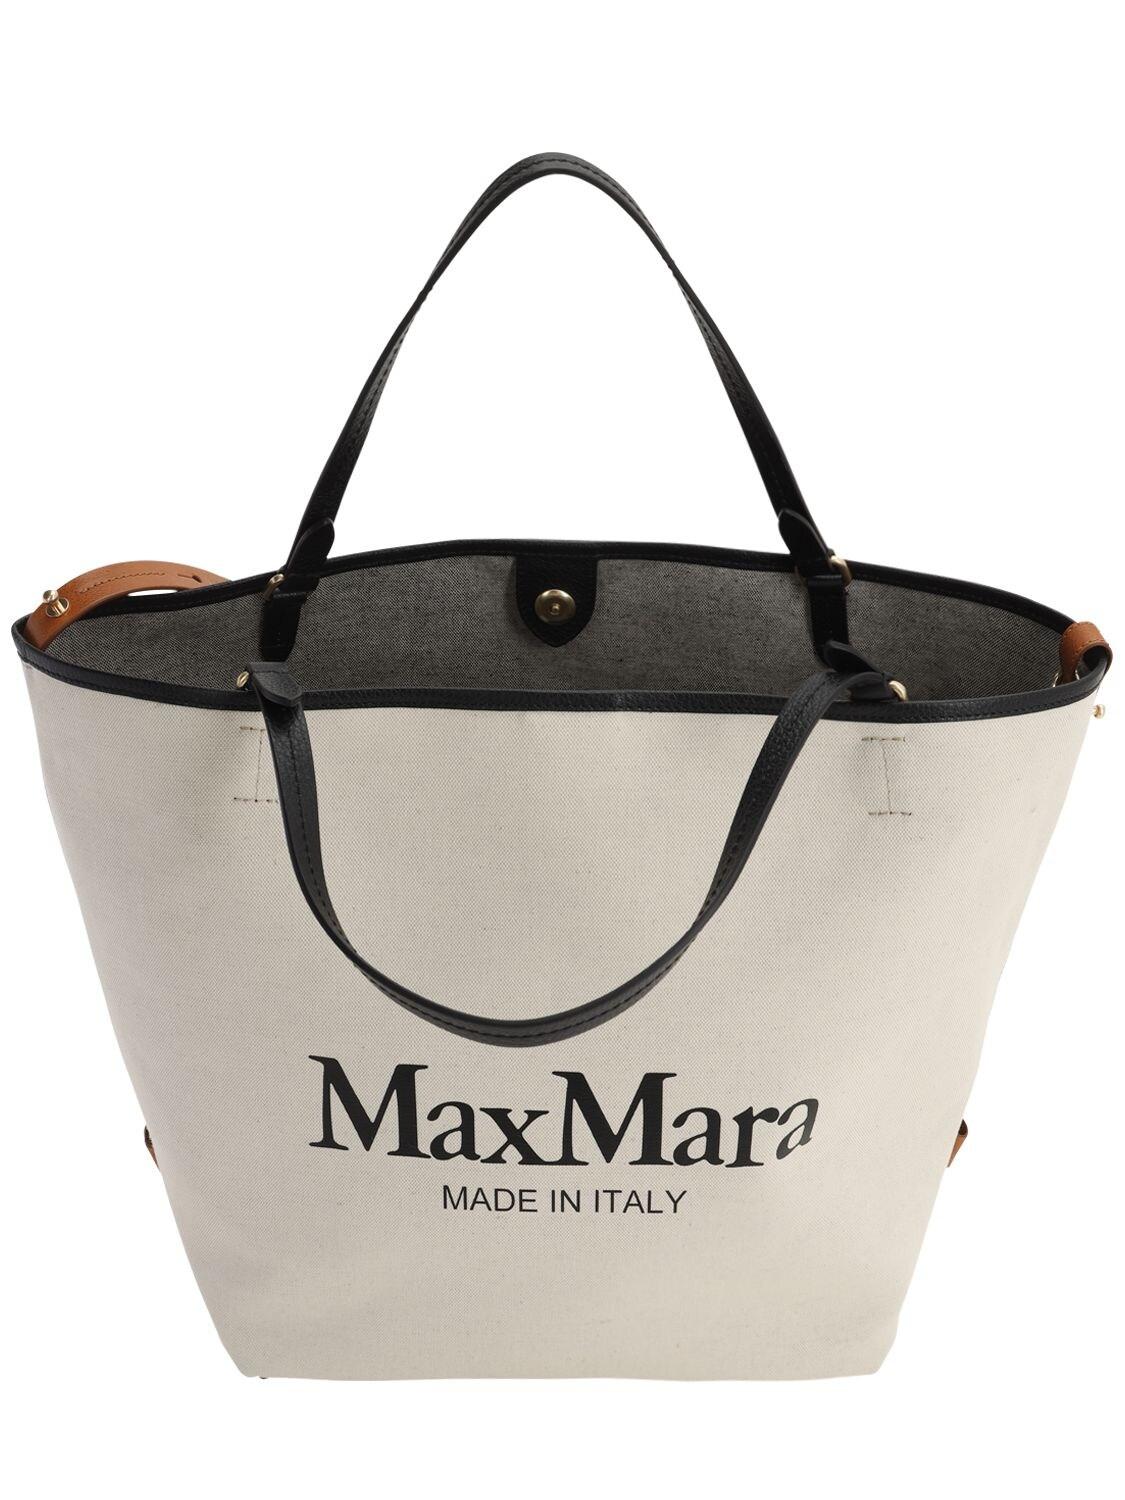 Max Mara Logo Printed Canvas Tote in Black | Lyst